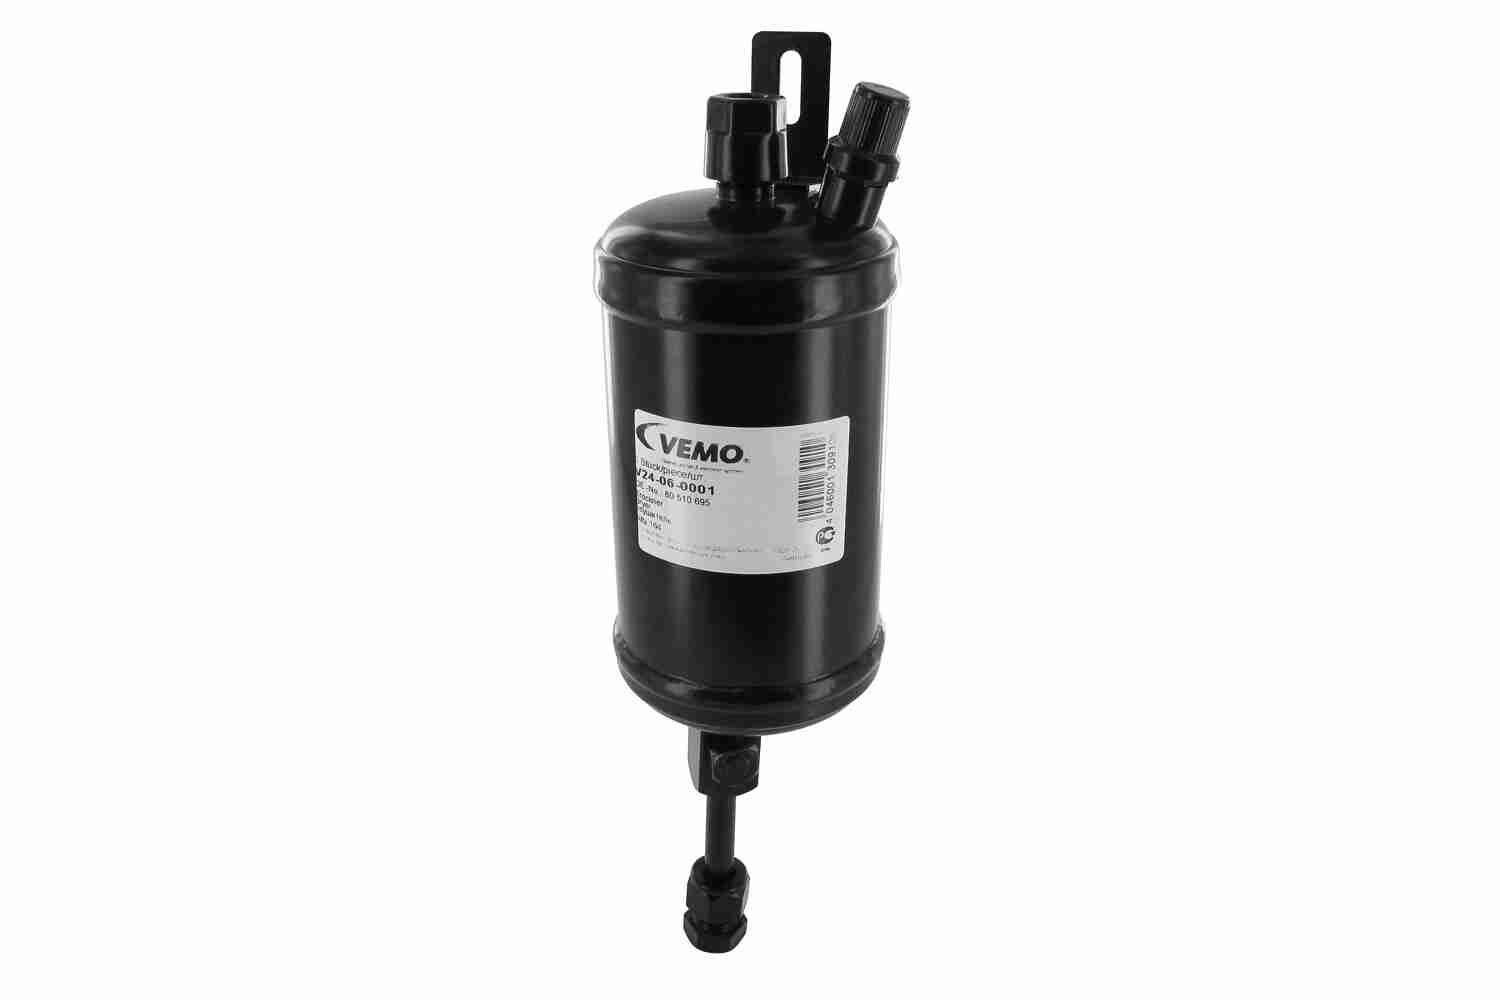 Vemo Airco droger/filter V24-06-0001